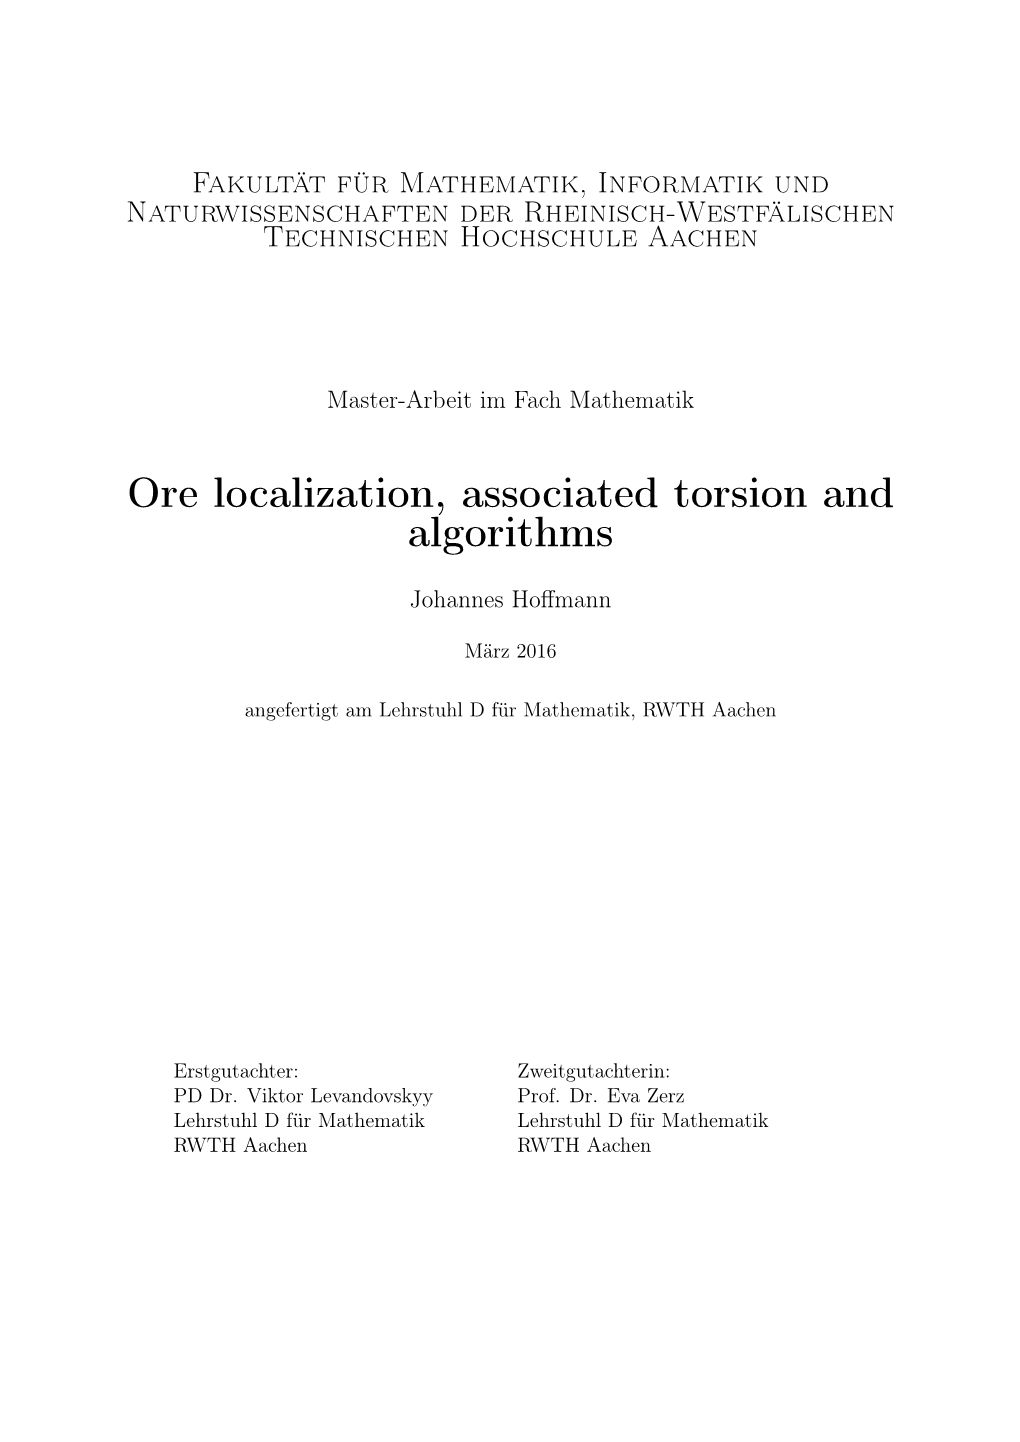 Ore Localization, Associated Torsion and Algorithms